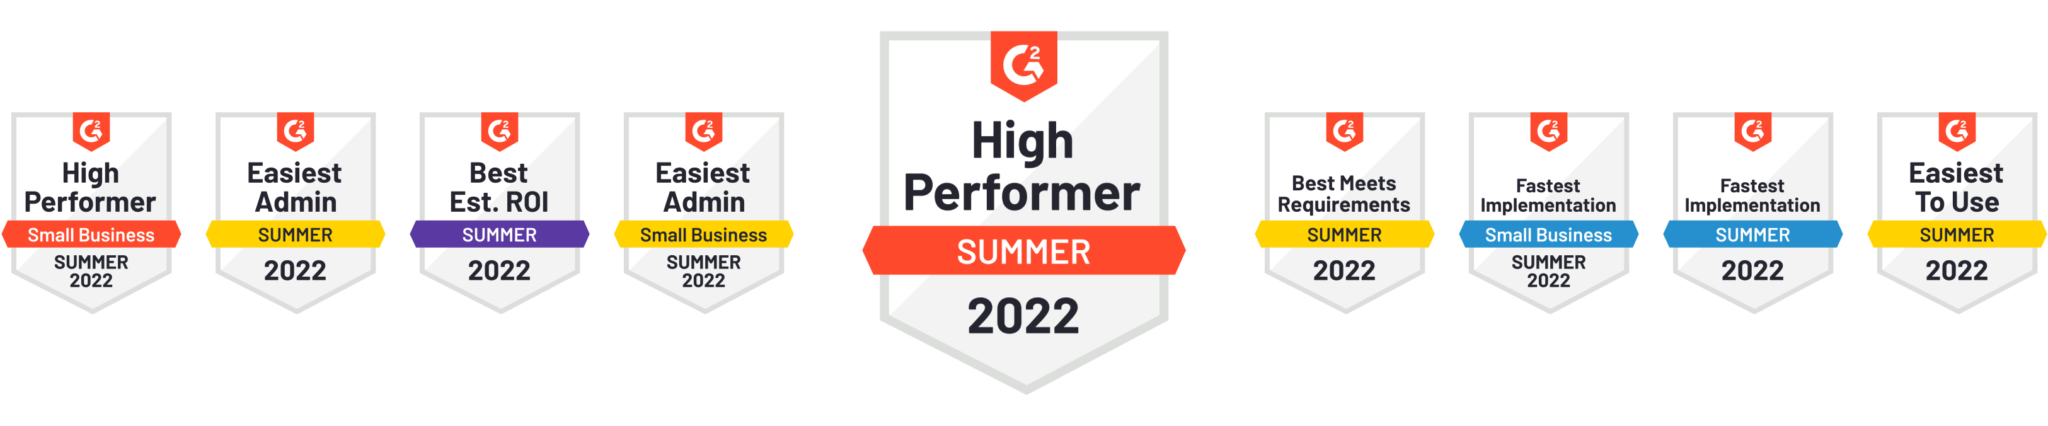 G2 Summer 2022 Badges